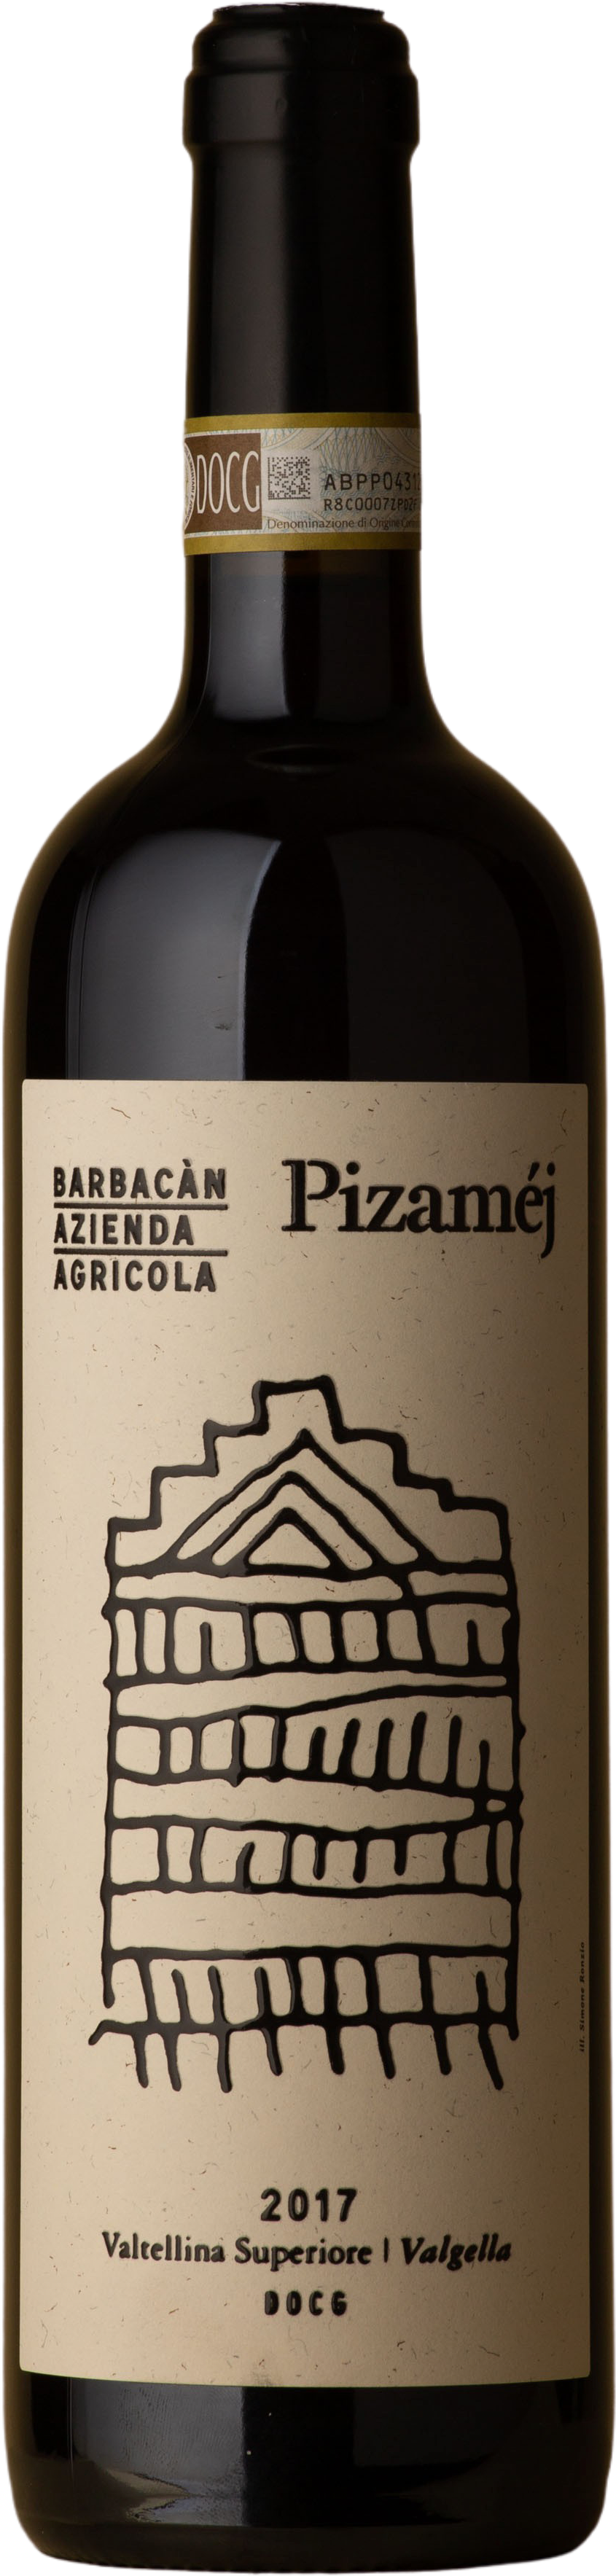 Barbacan - Pizamej Nebbiolo 2017 Red Wine